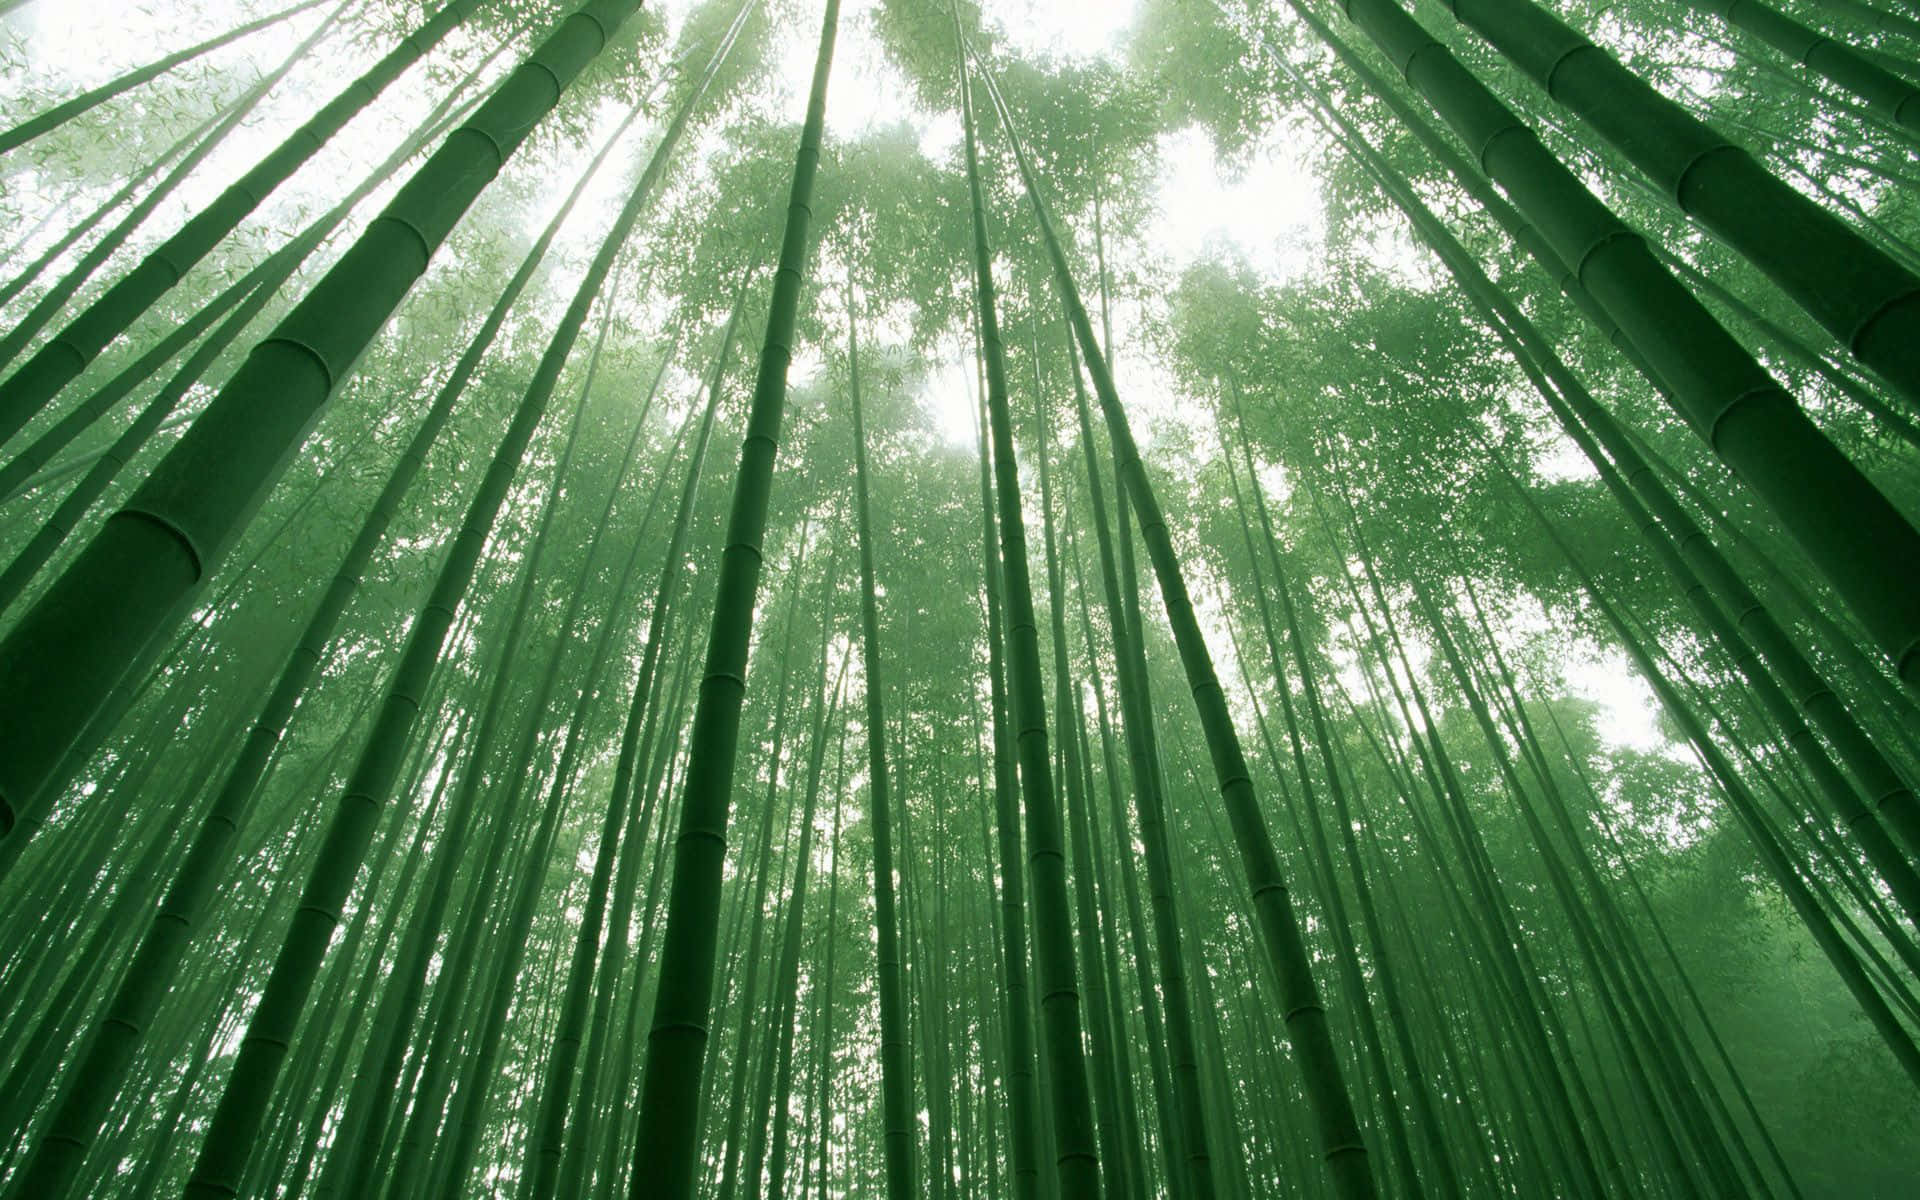 Lush green bamboo shoots creating a calming environment.